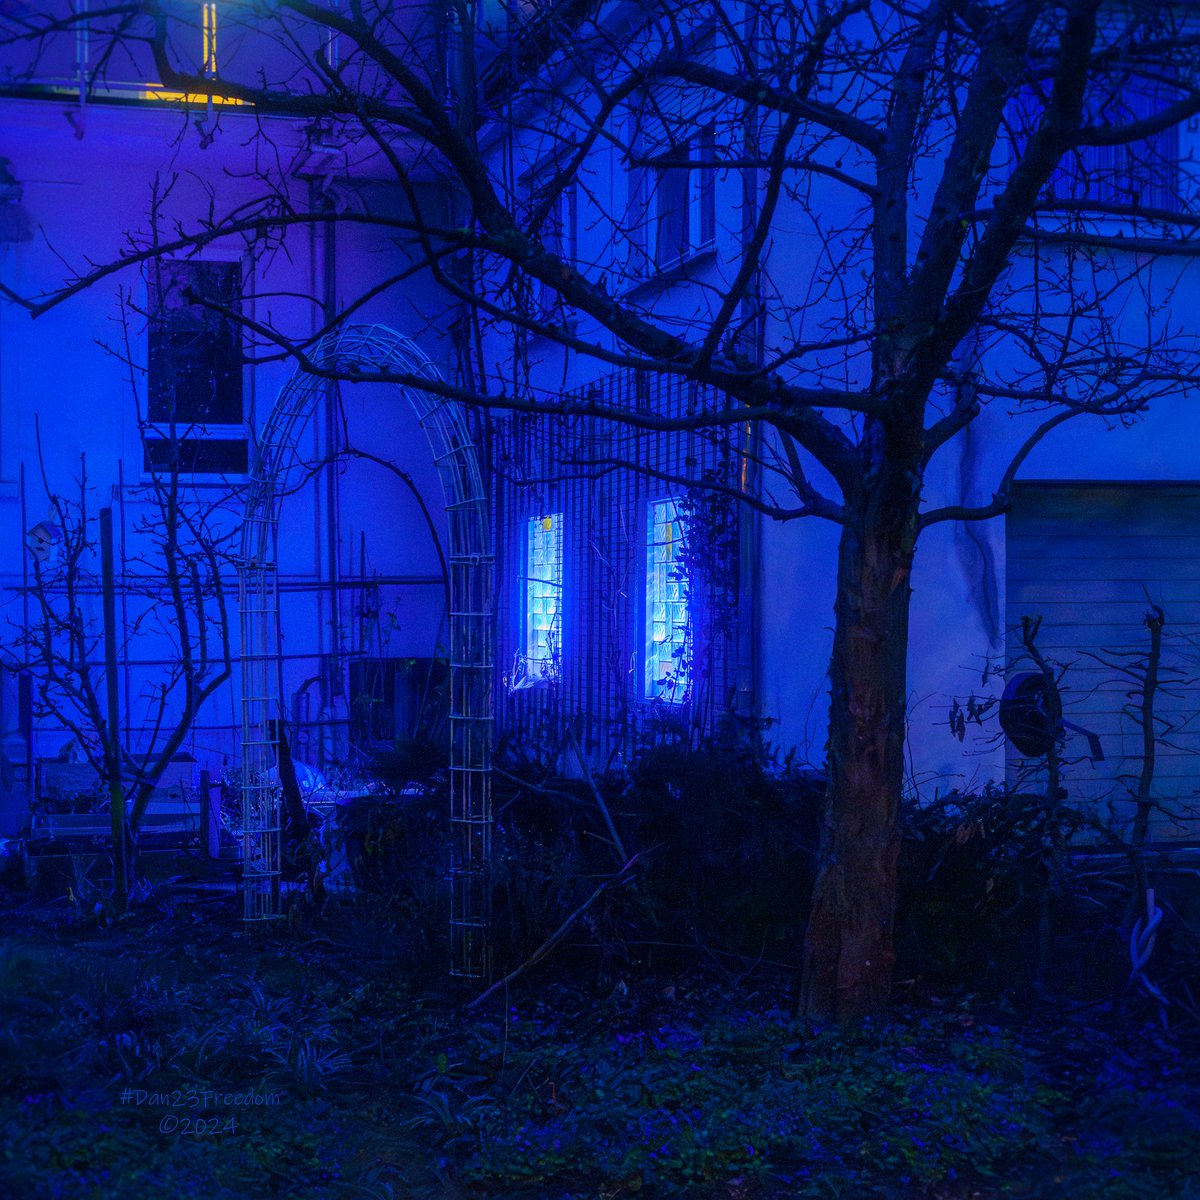 📷 1/80 sec at f/4,0, ISO 12800, 40 mm prime #dan23freedom
#germany #nordrheinwestfalen #urbanphotography #urbanexploration #exlore #walk #blue #NightPhotography #MysteriousNights #UrbanGardenAtNight